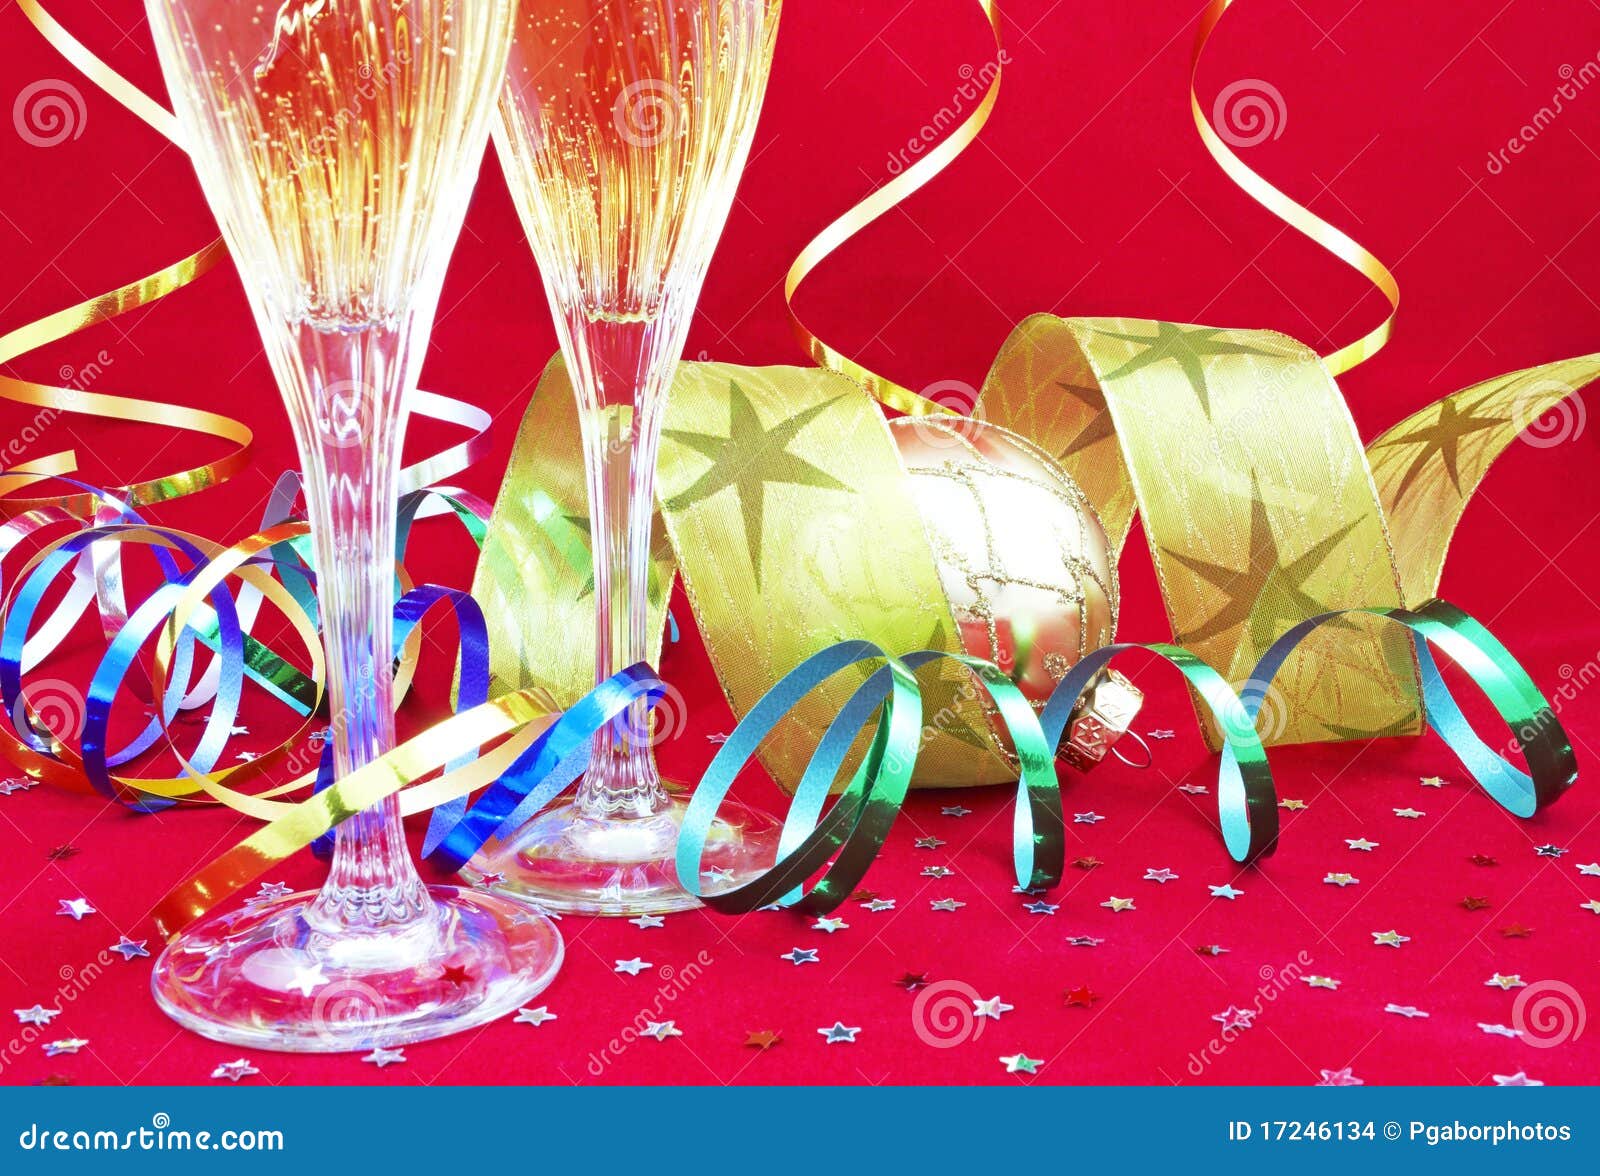 New Year decoration stock photo. Image of happy, liquid - 17246134